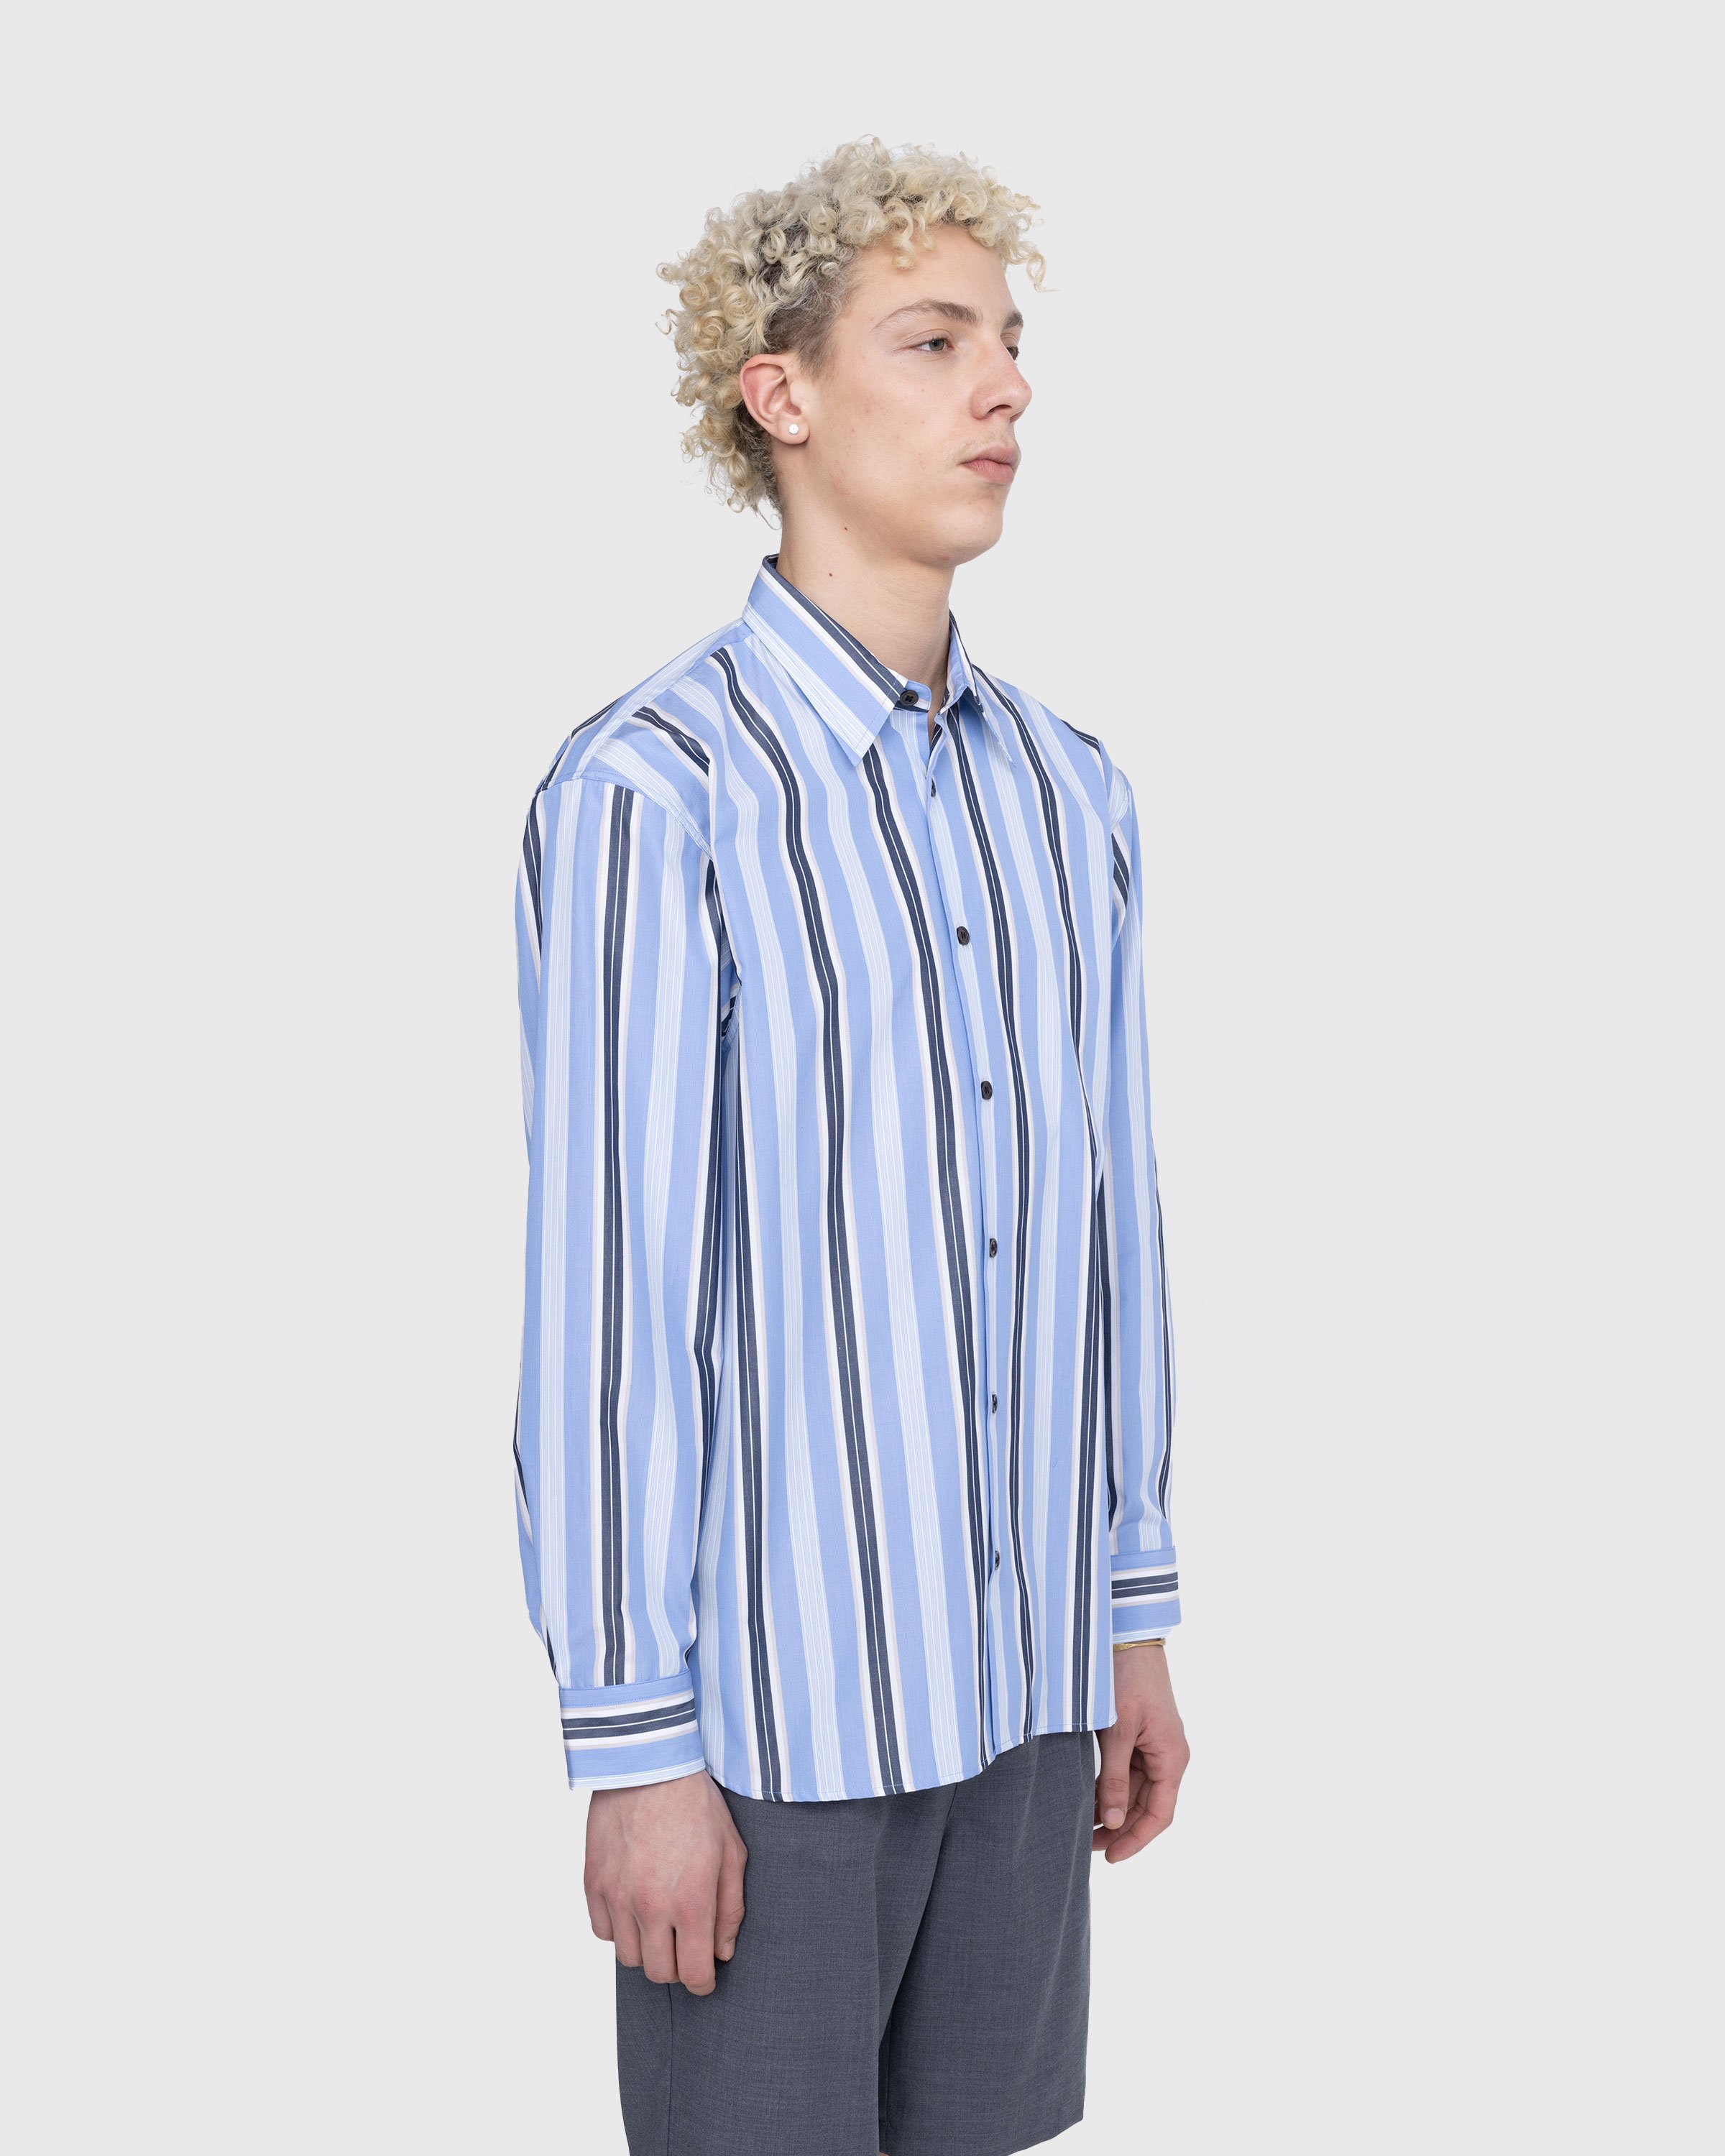 Dries van Noten - Croom Shirt Light Blue - Clothing - Blue - Image 4